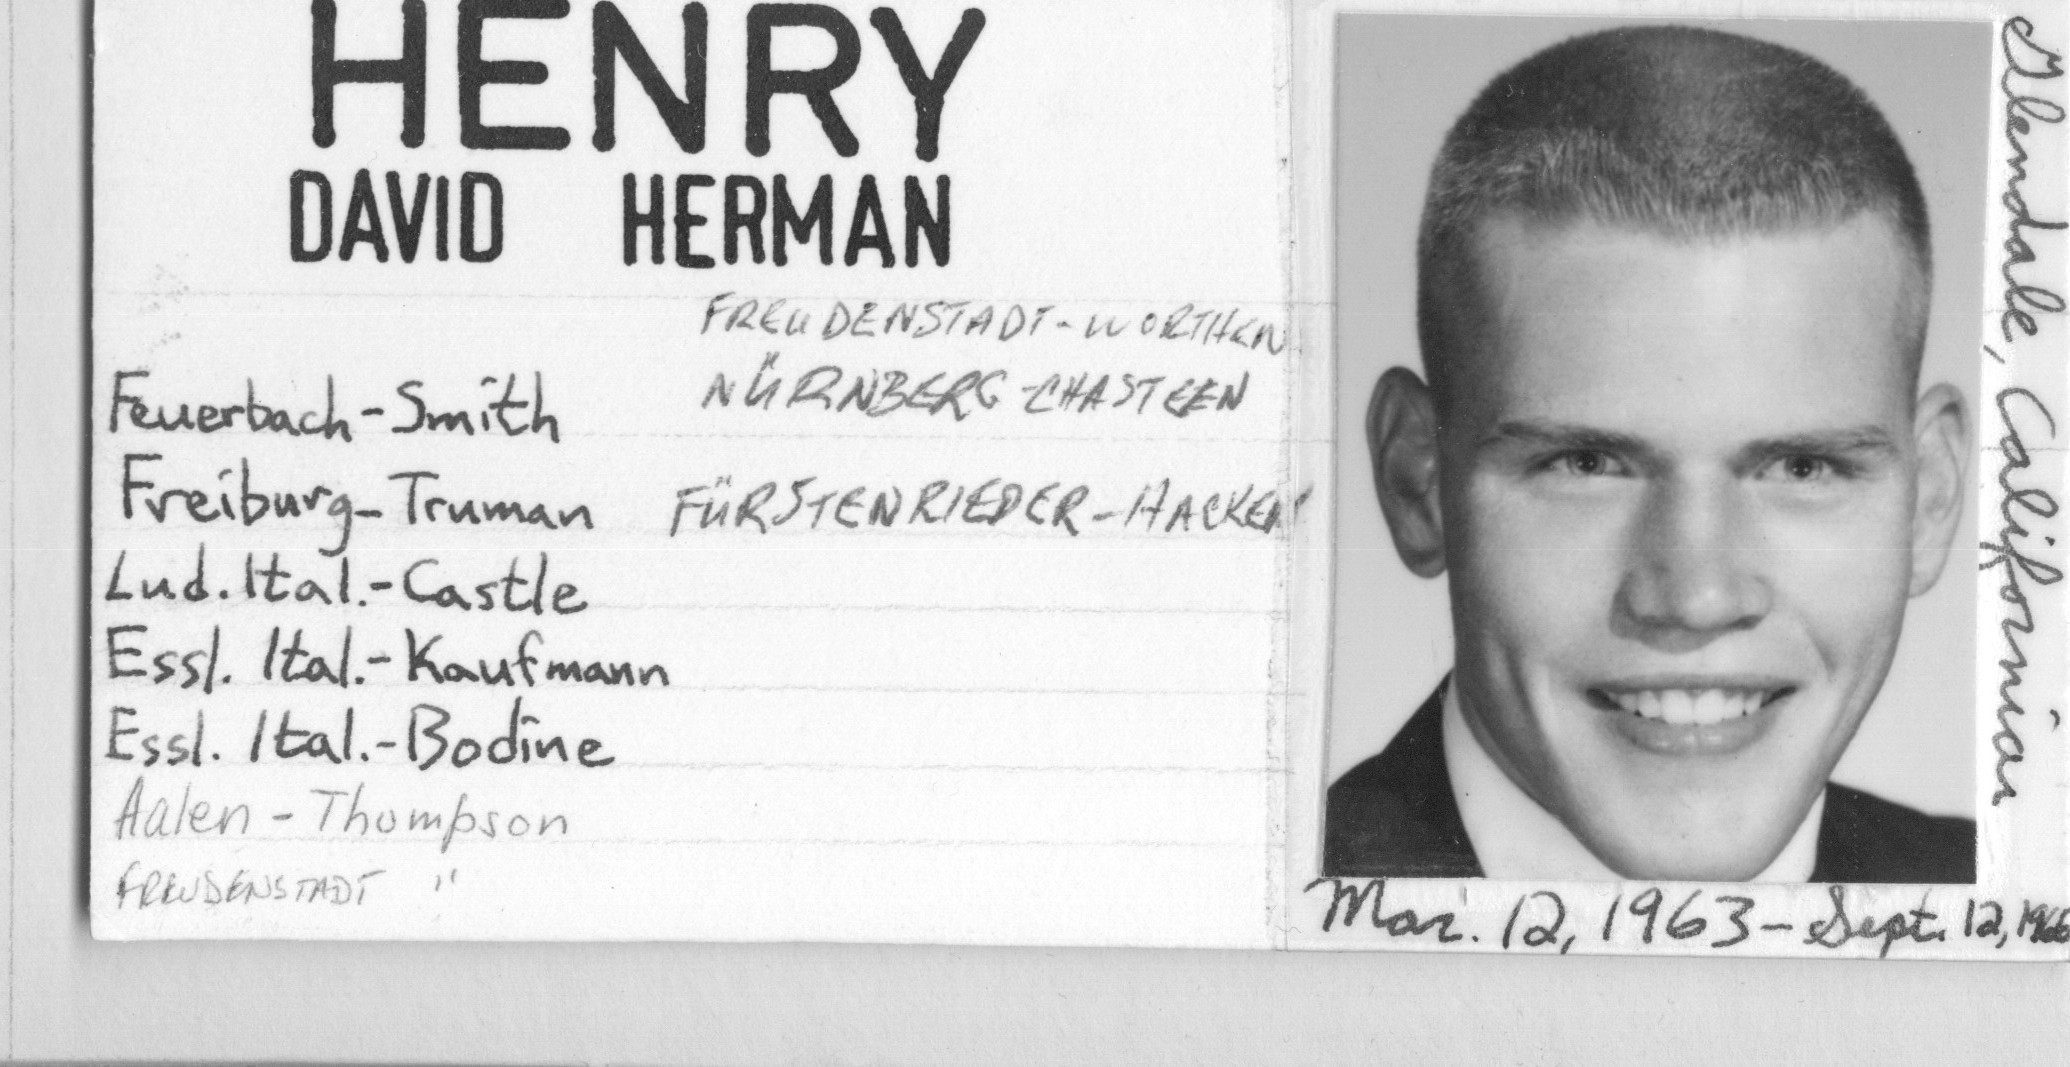 Henry, David Herman